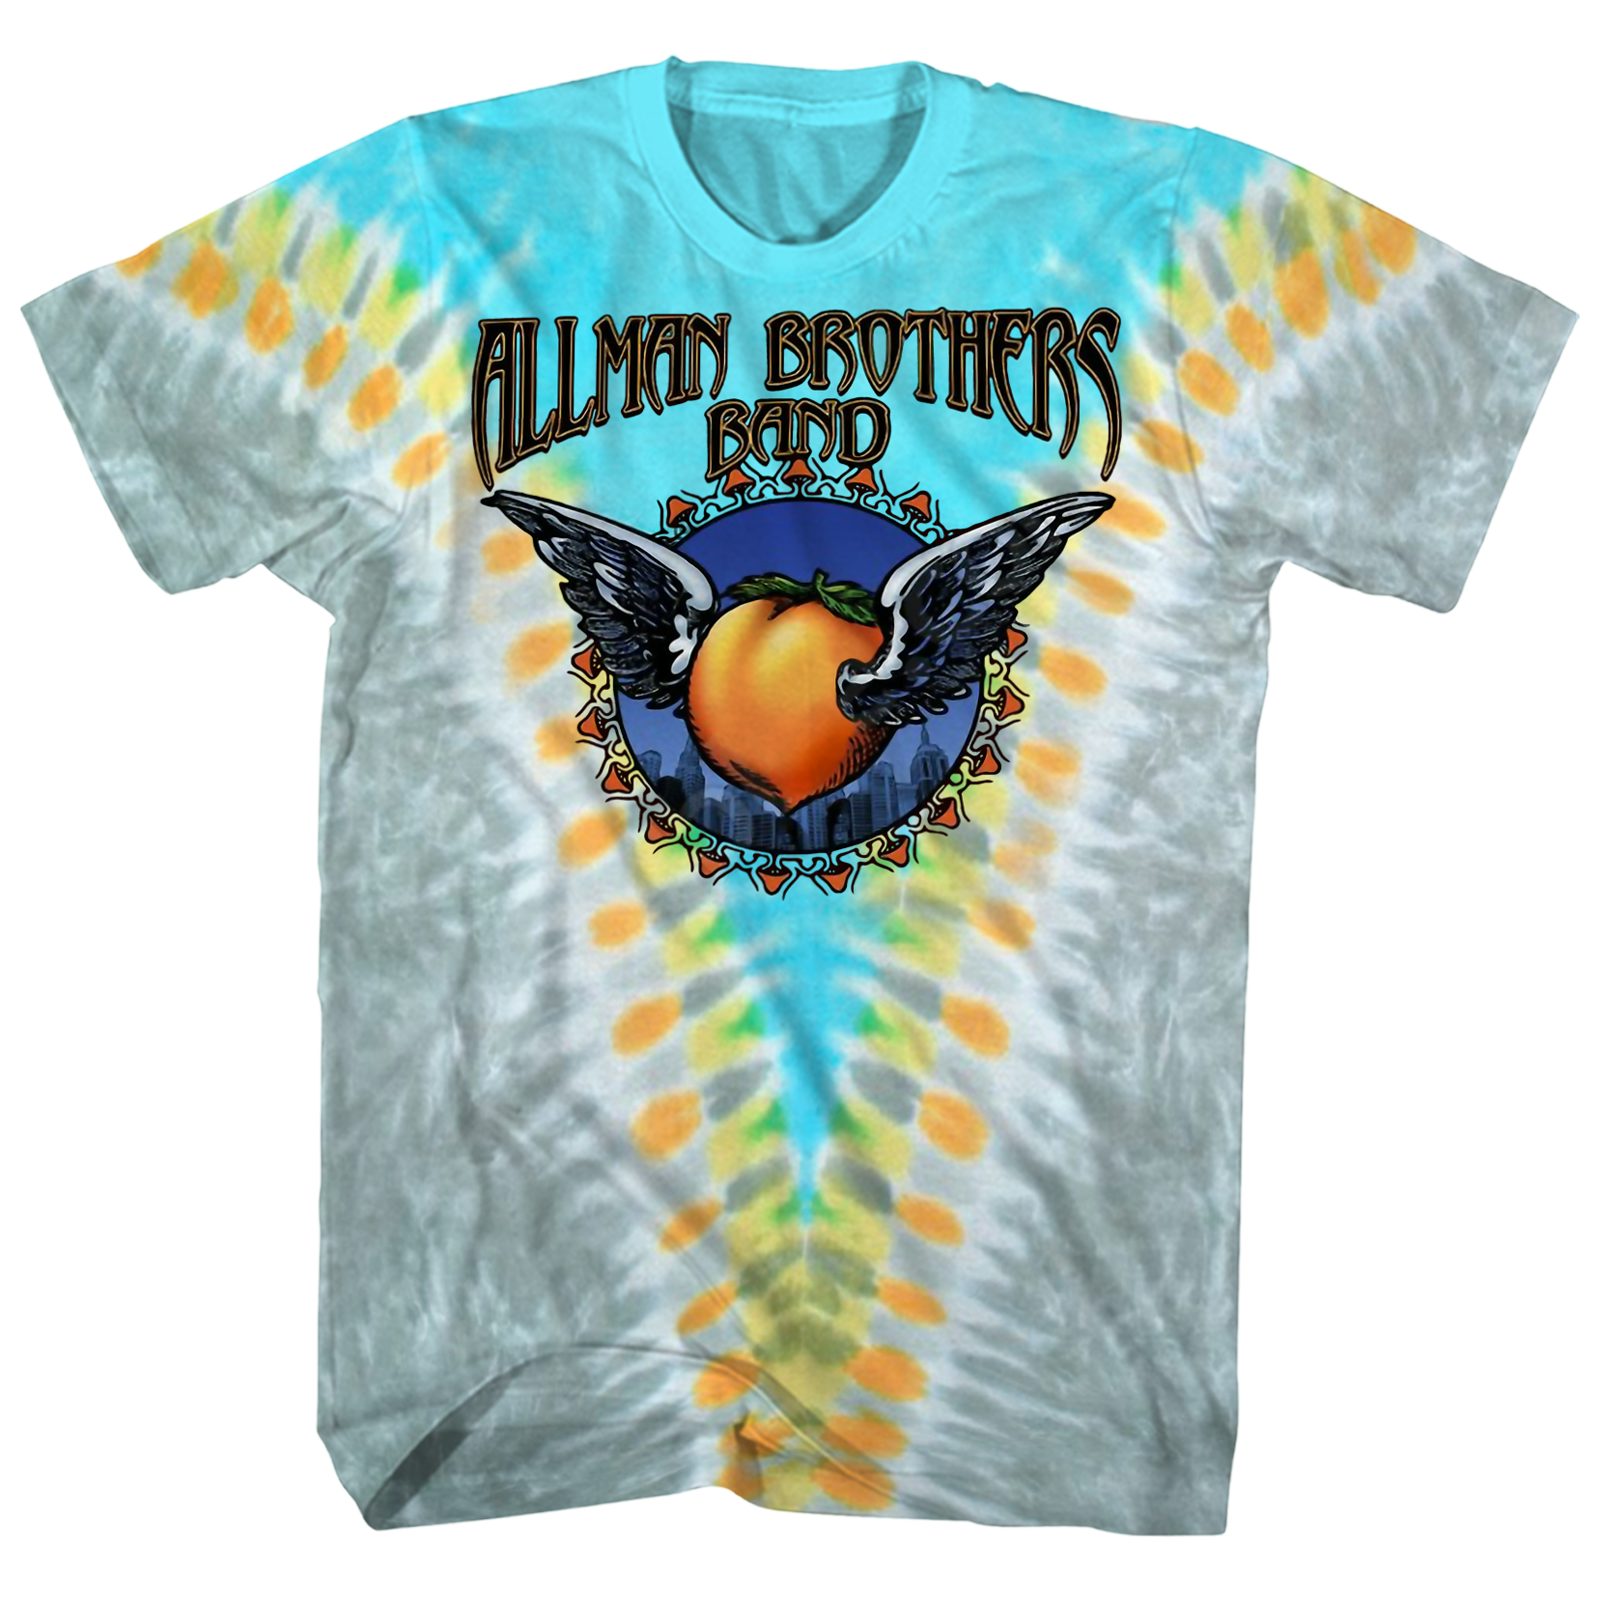 allman brothers shirt